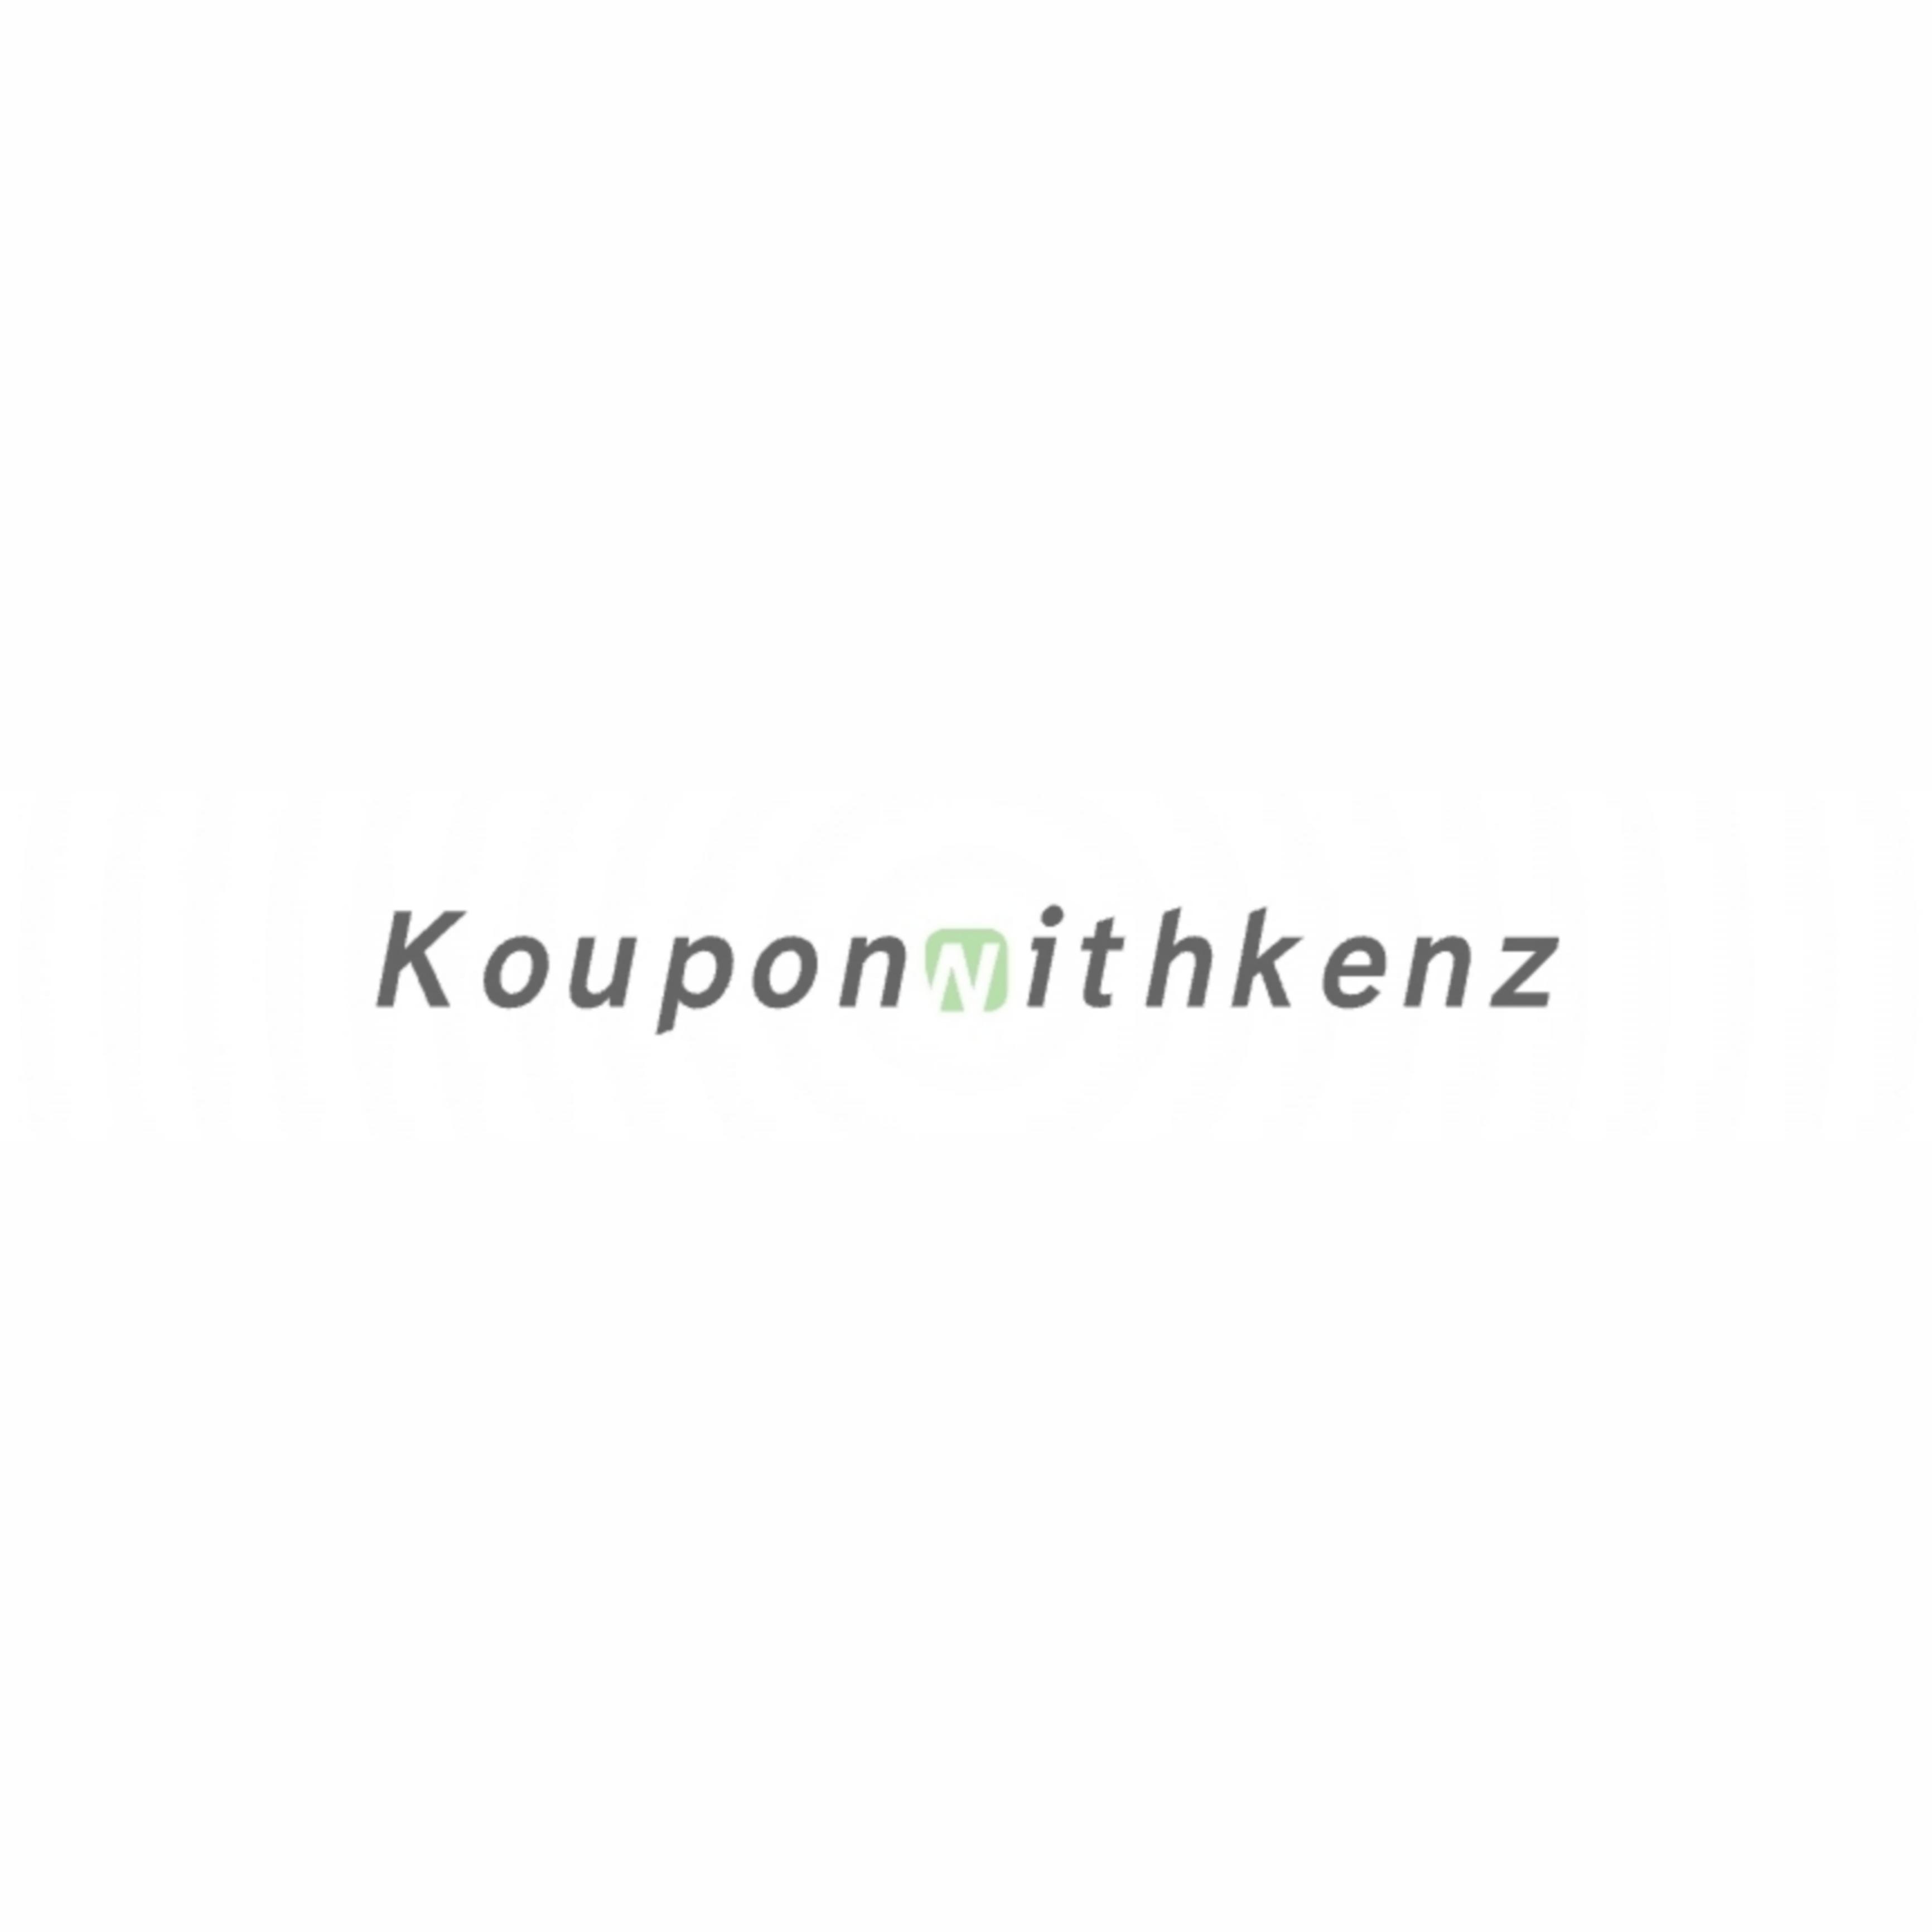 kouponwithkenz's images